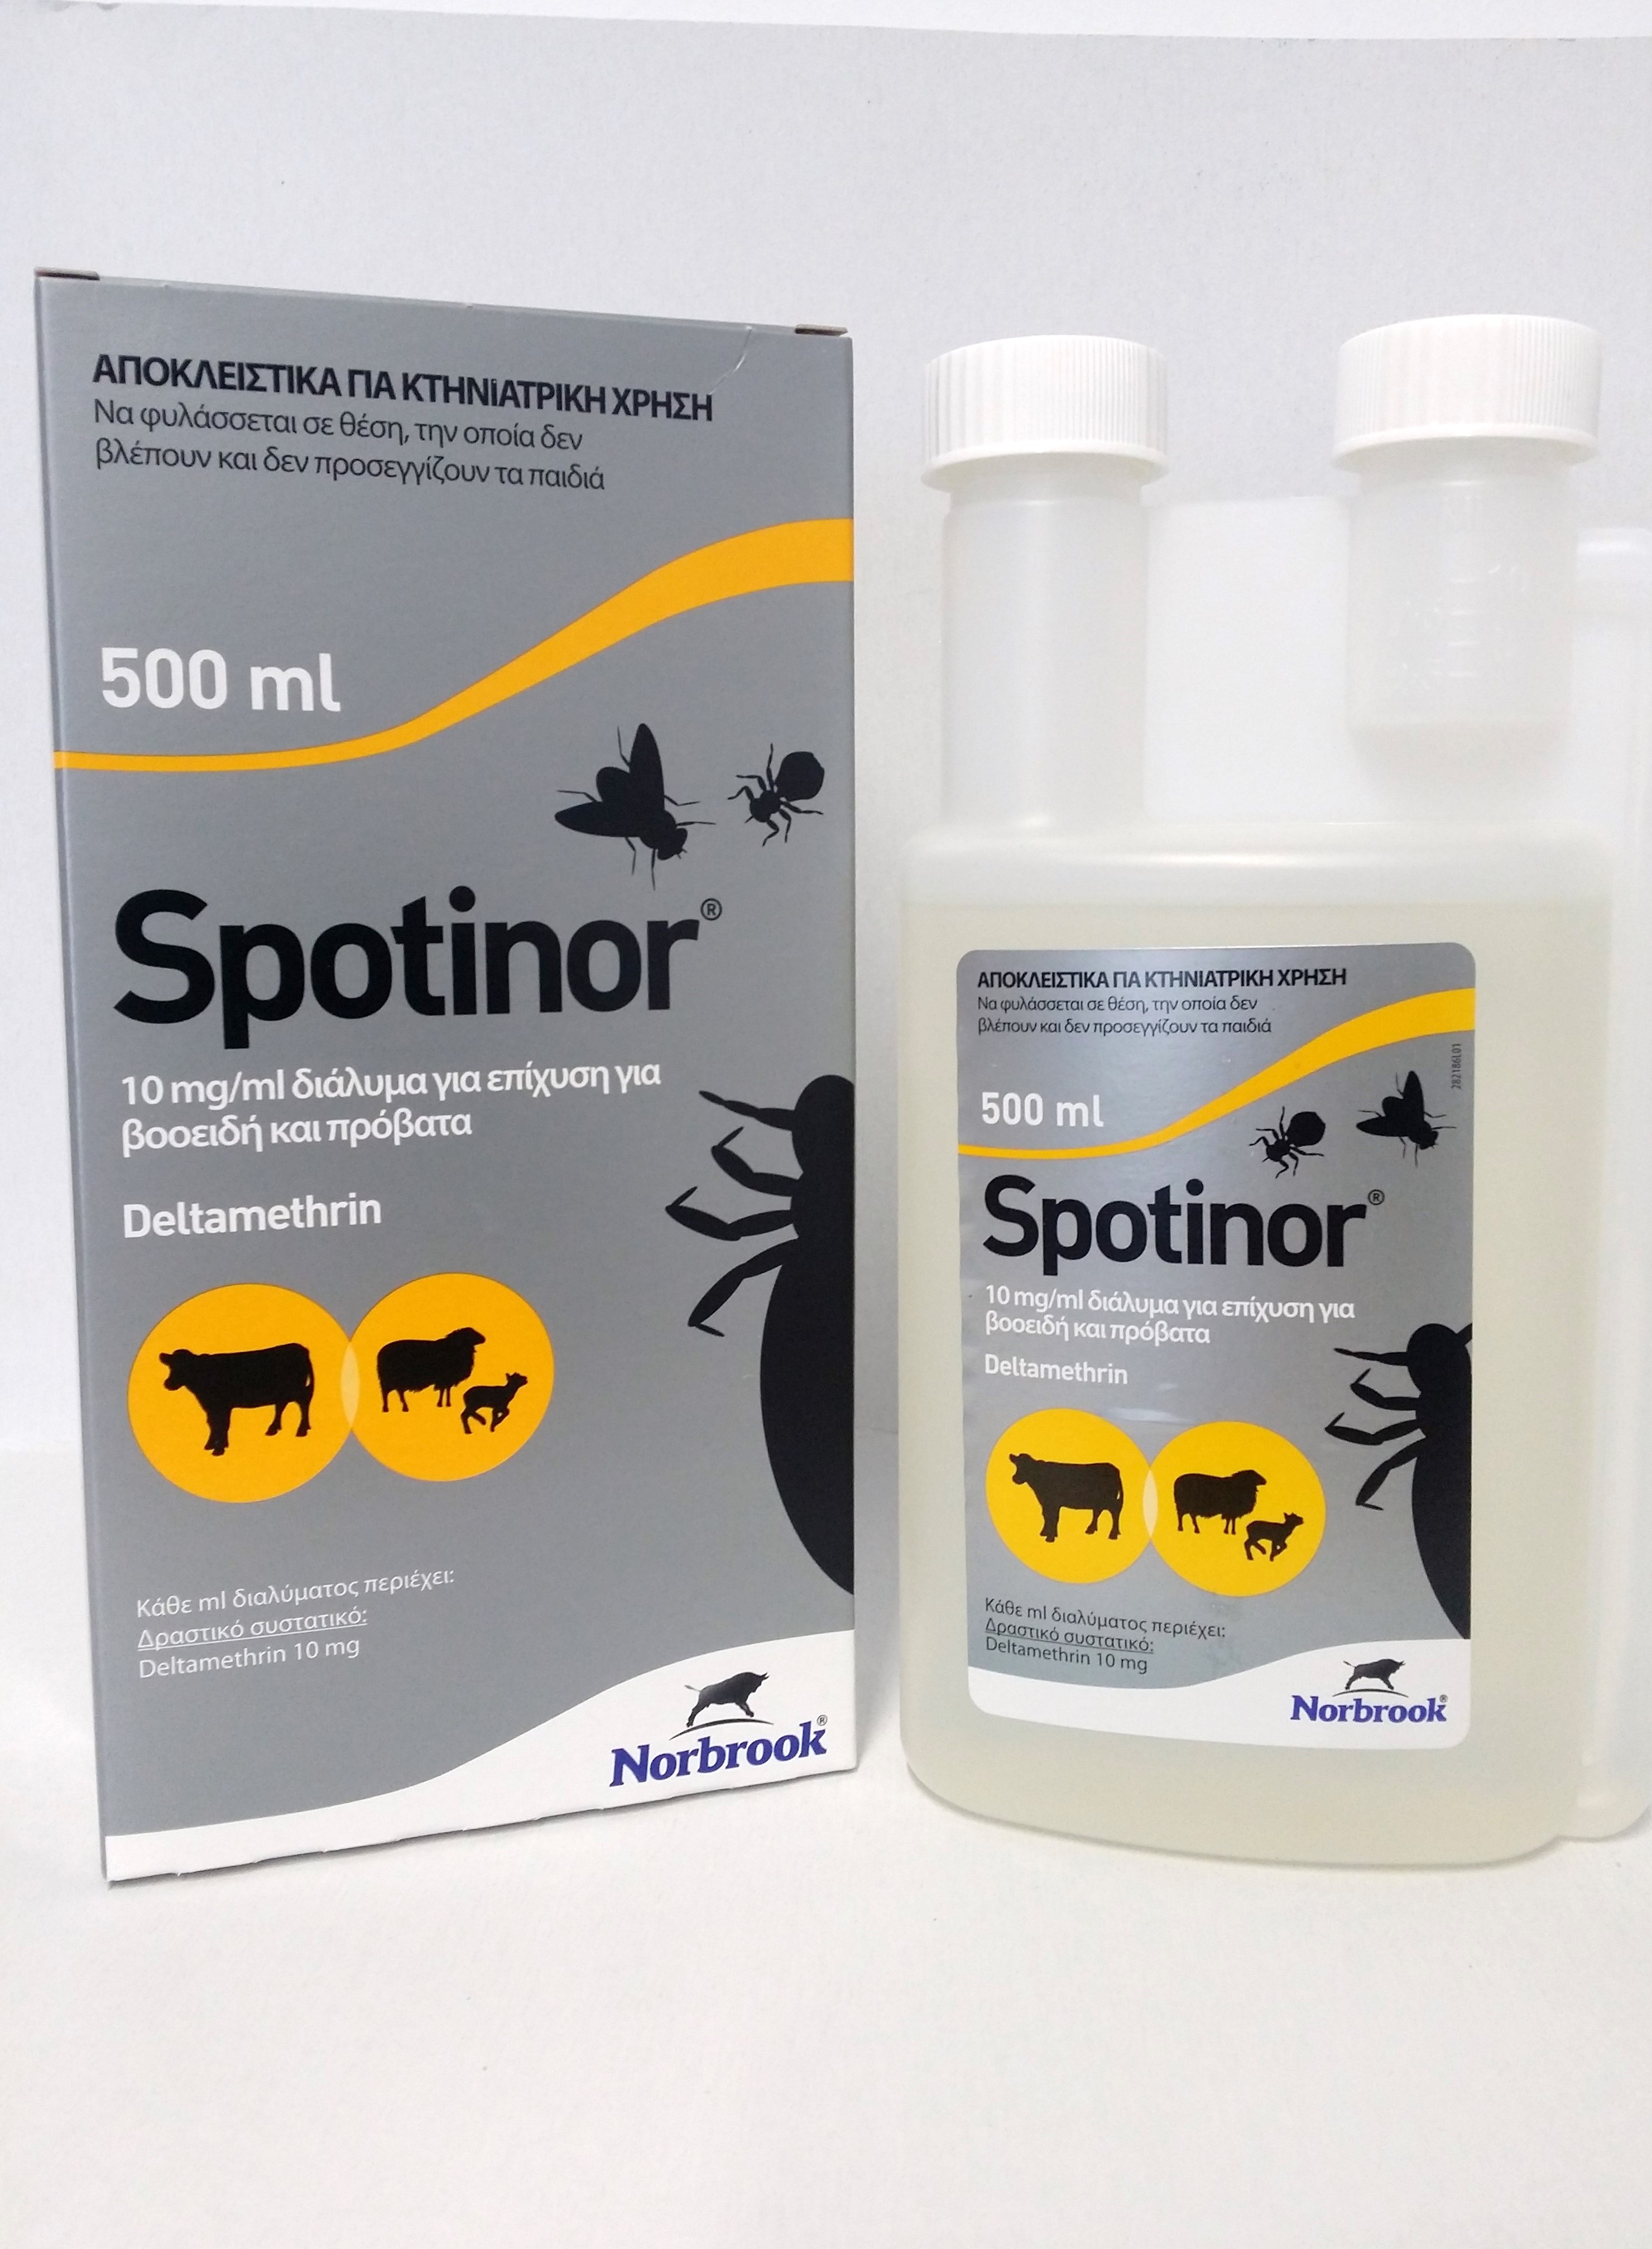 Spotinor 10 mg/ml, 500 ml